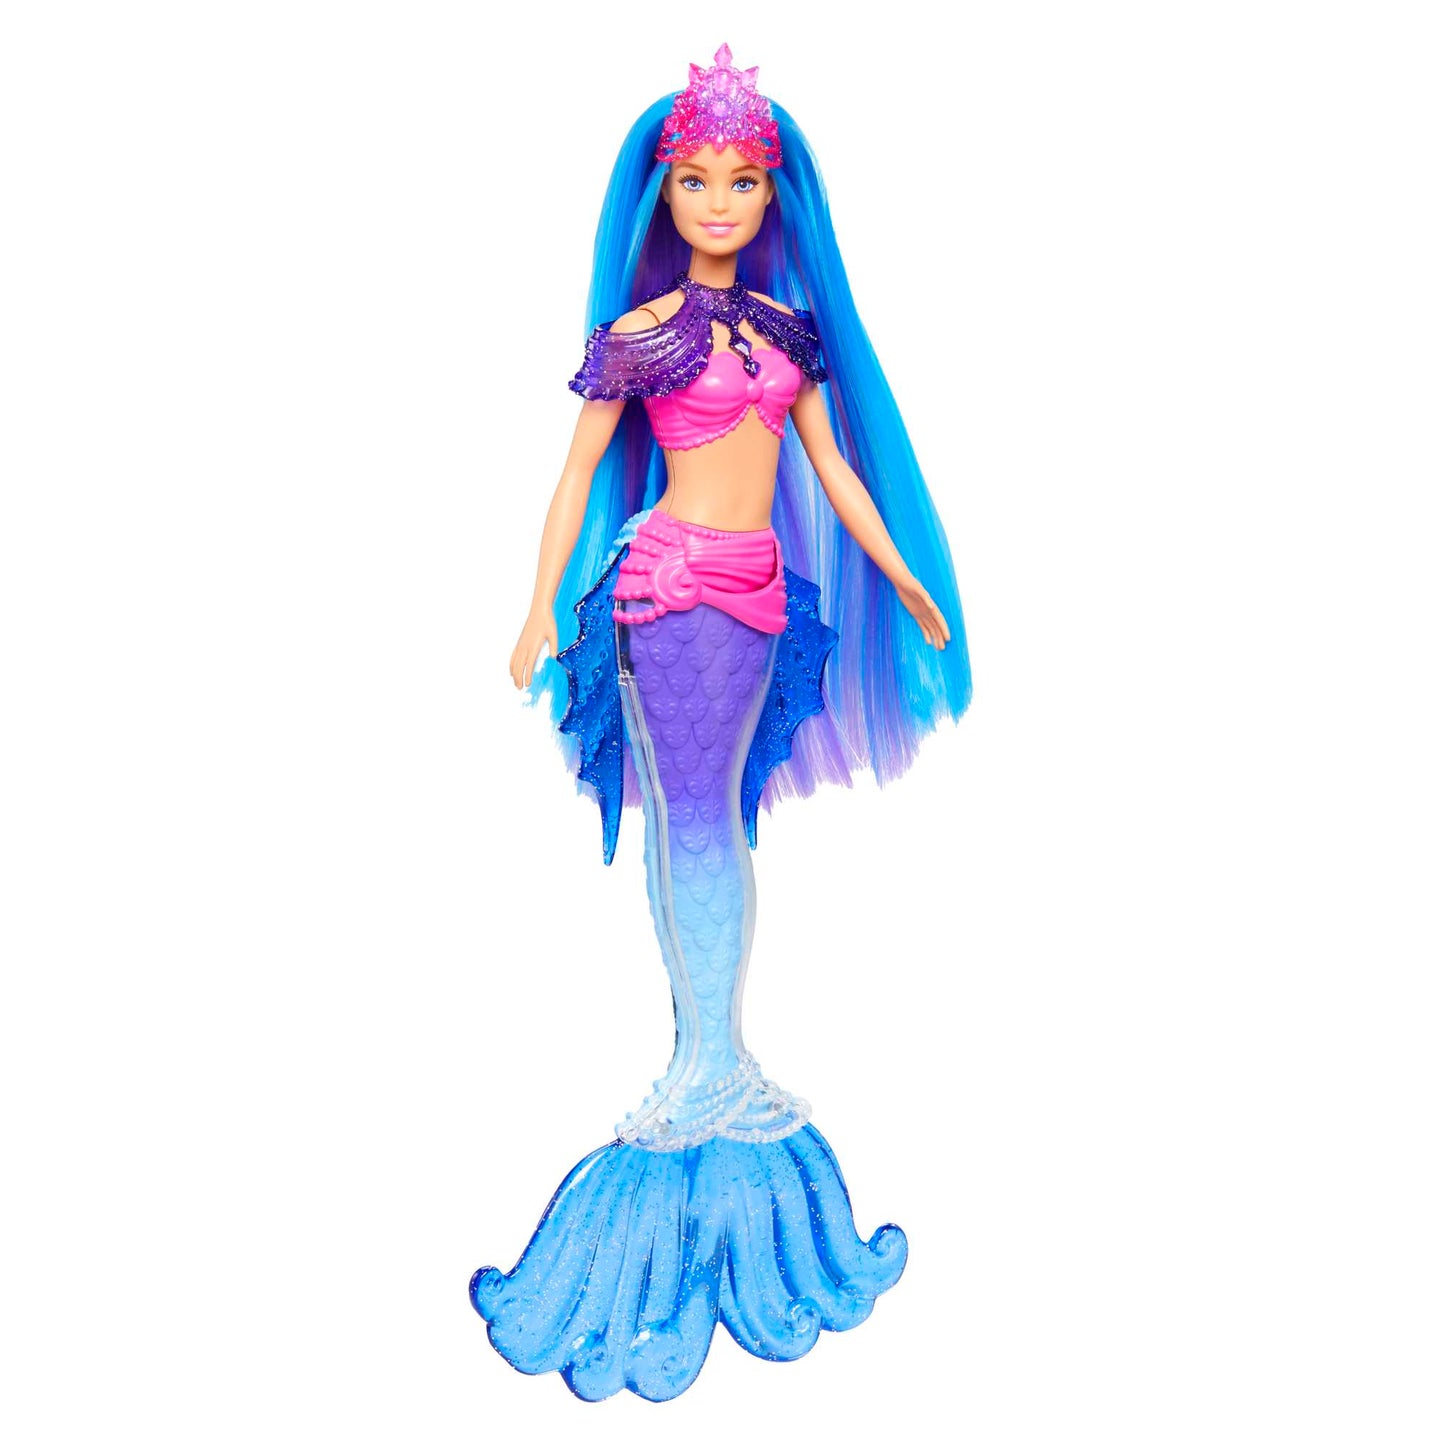 Barbie - Mermaid Barbie "Malibu" Doll With Pet And Accessories